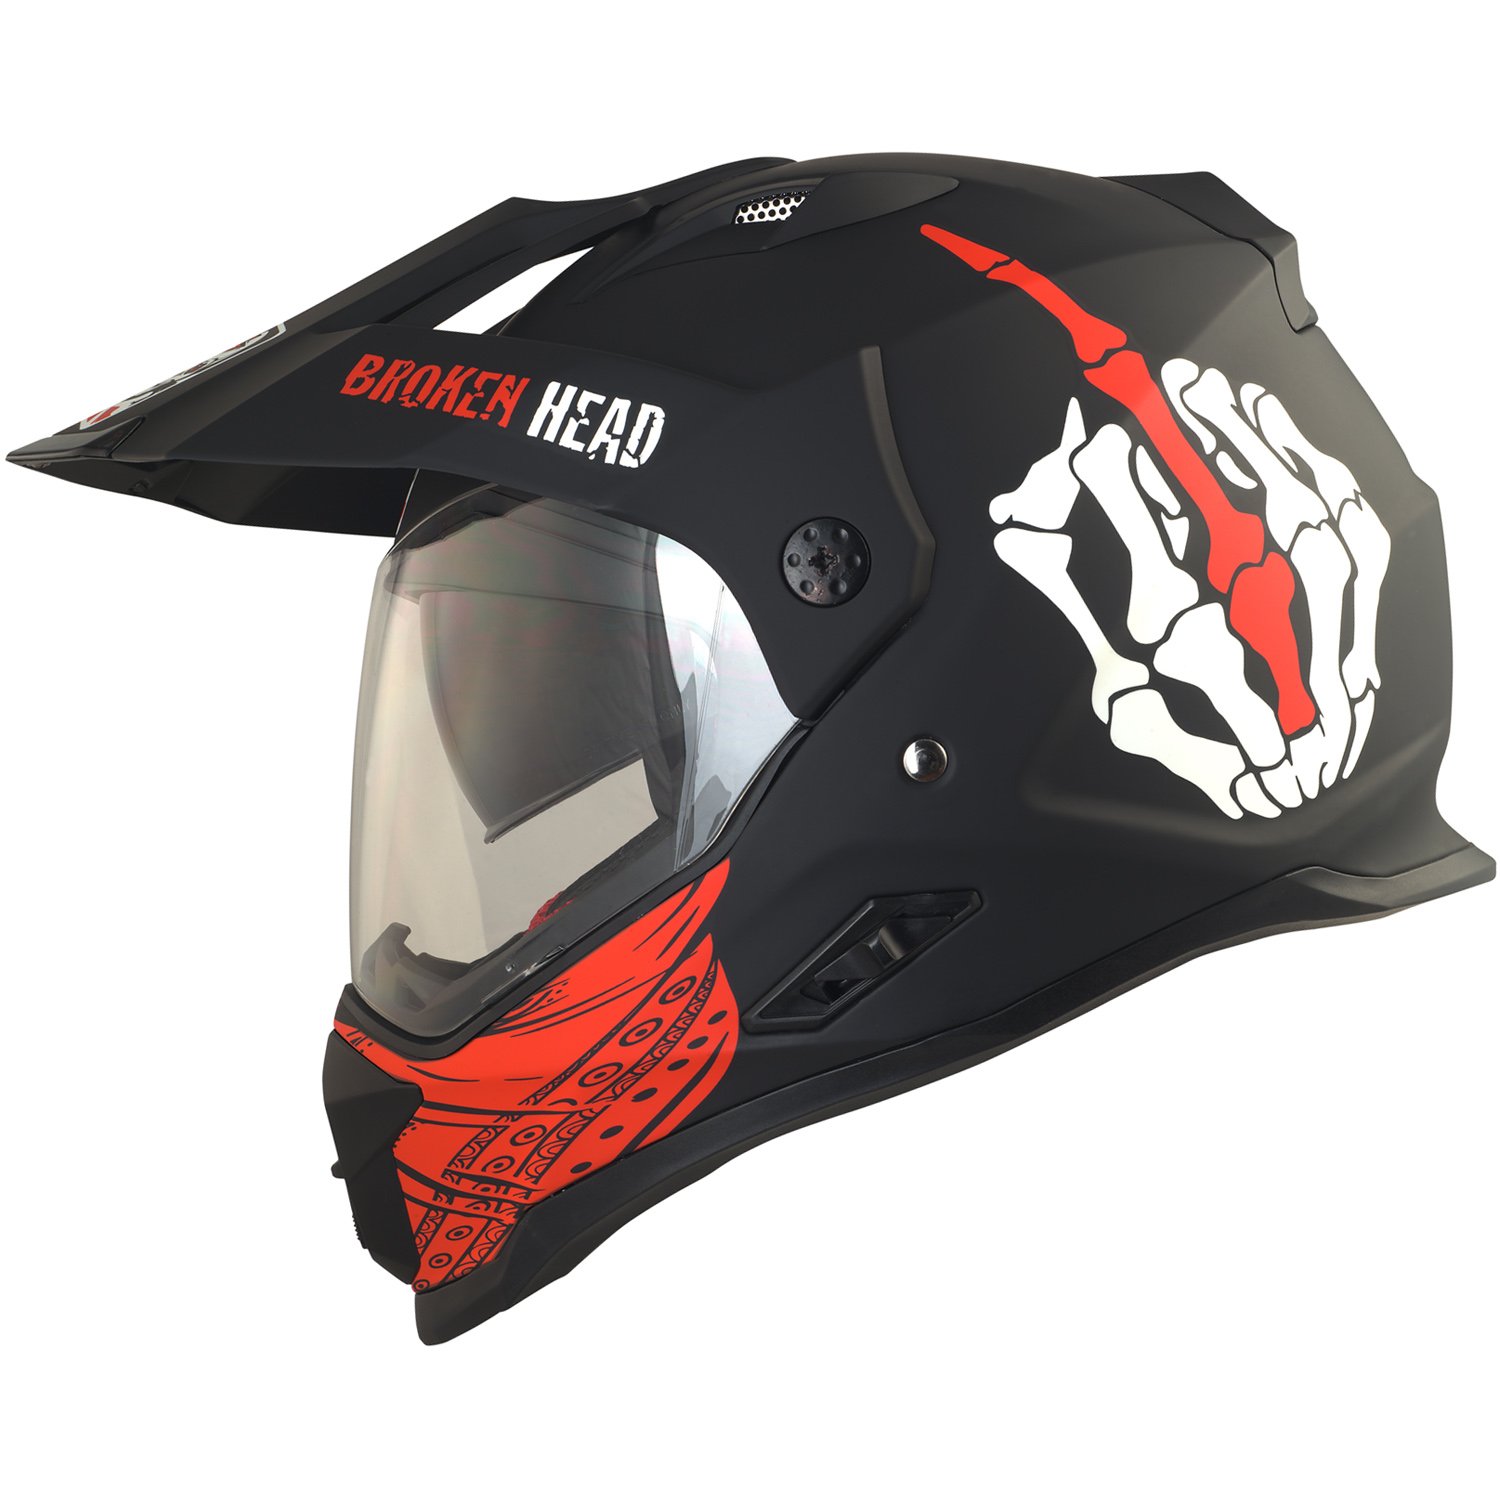 Broken Head Street Rebel Motocross-Helm rot mit Visier - Enduro-Helm - MX Cross-Helm mit Sonnenblende - Quad-Helm (L 59-60 cm)